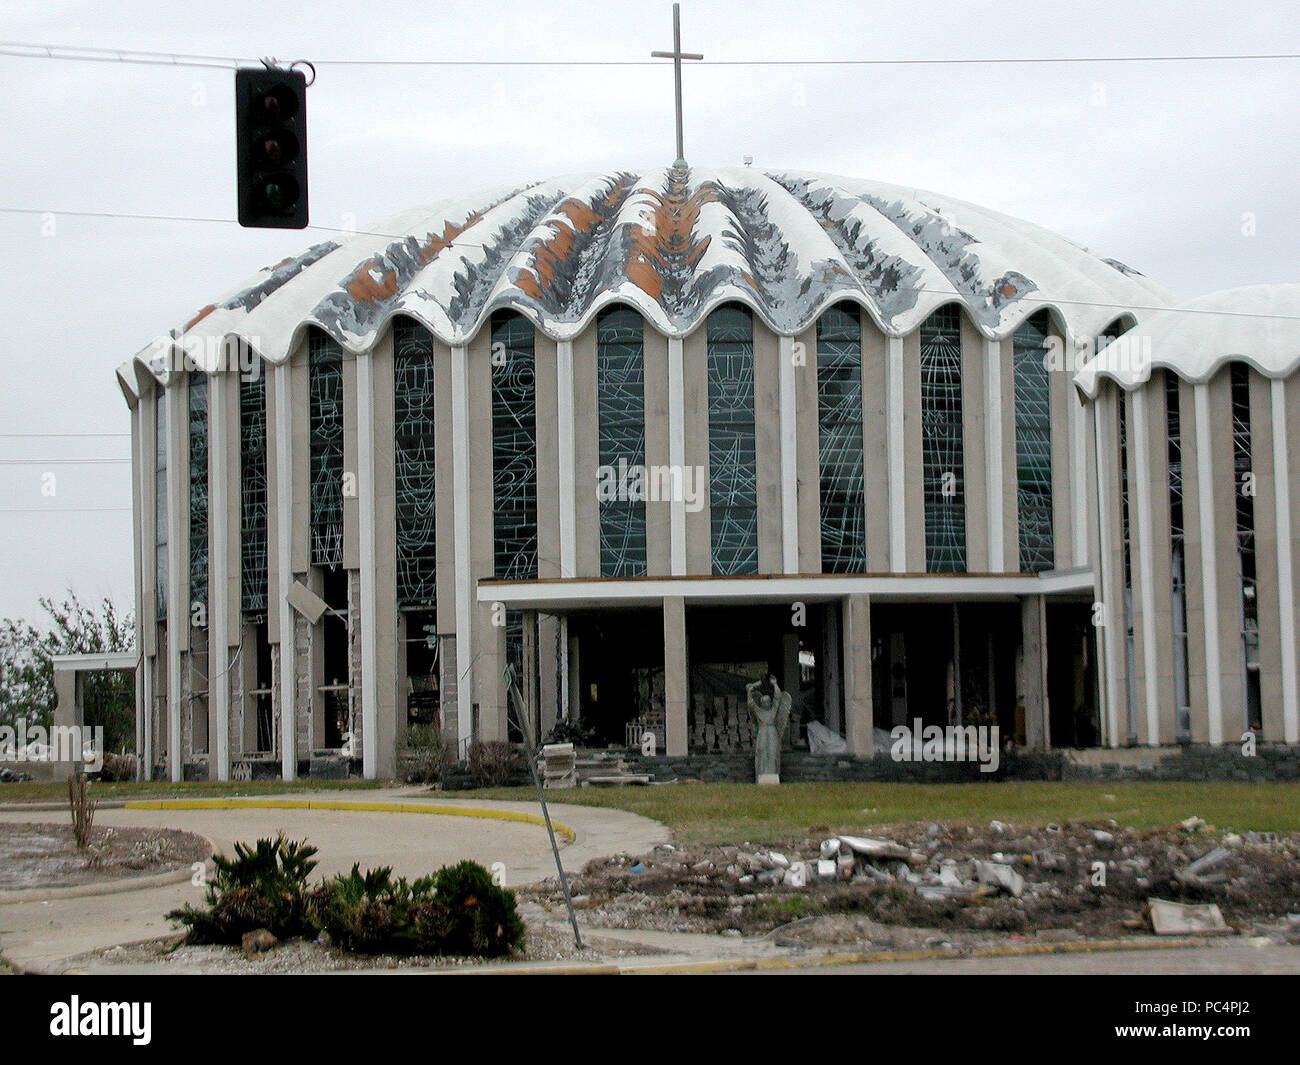 Hurricane Katrina Aftermath - Damaged church building Stock Photo